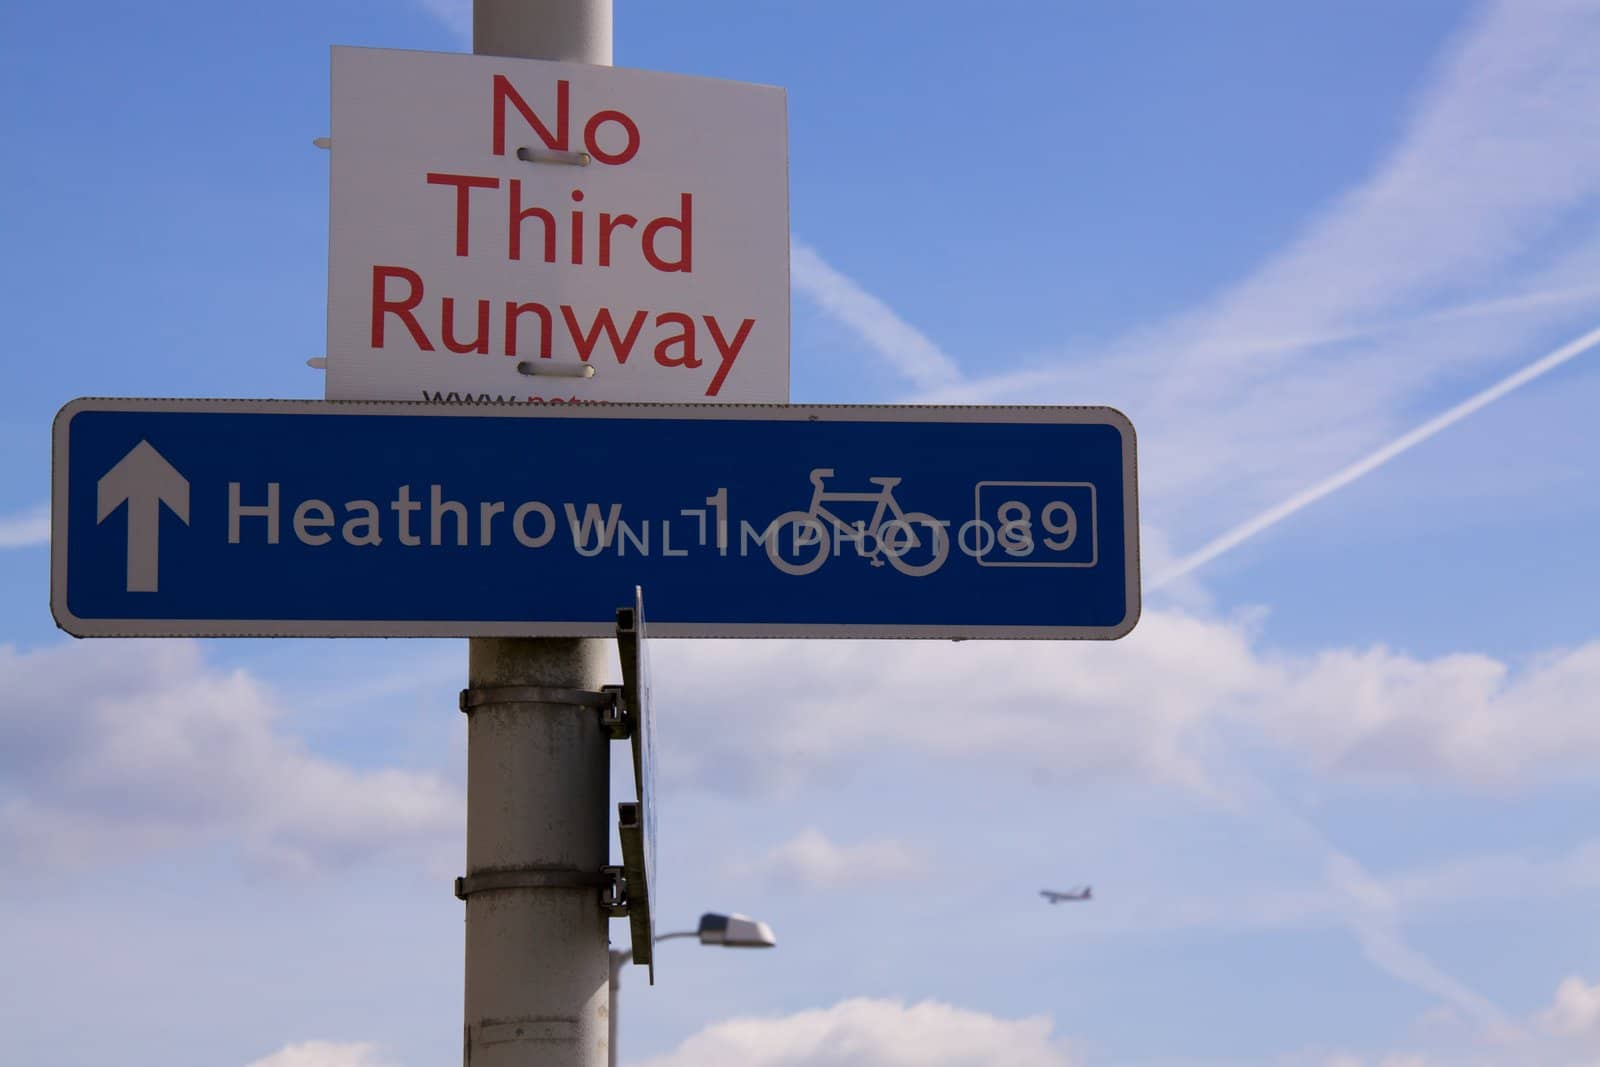 No third runway on Heathrow by Harvepino